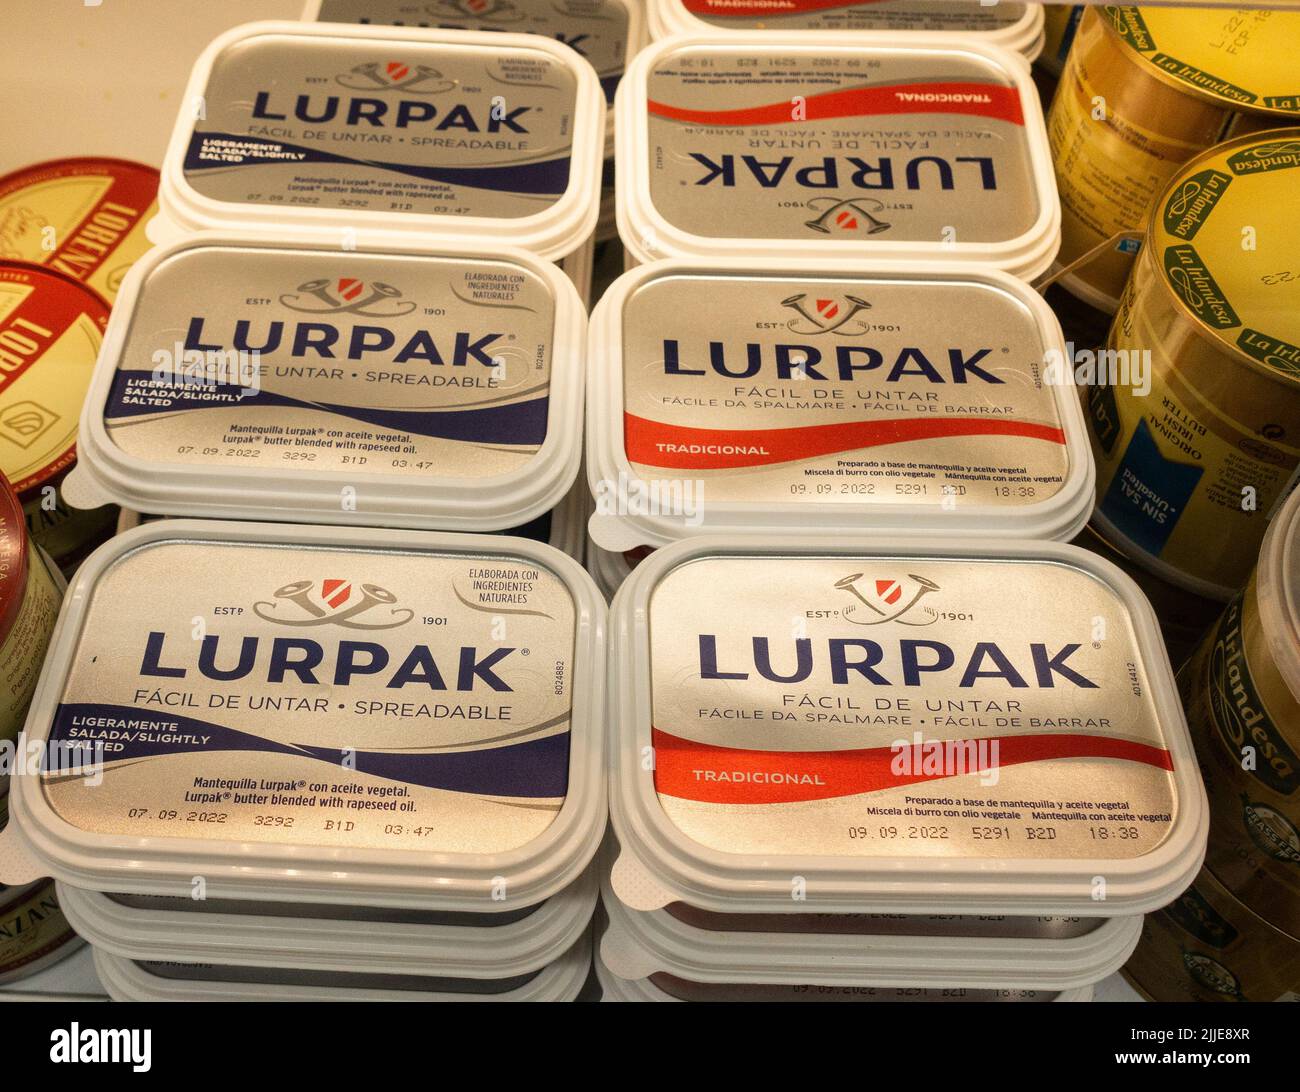 Lurpak butter in supermarket in Spain Stock Photo